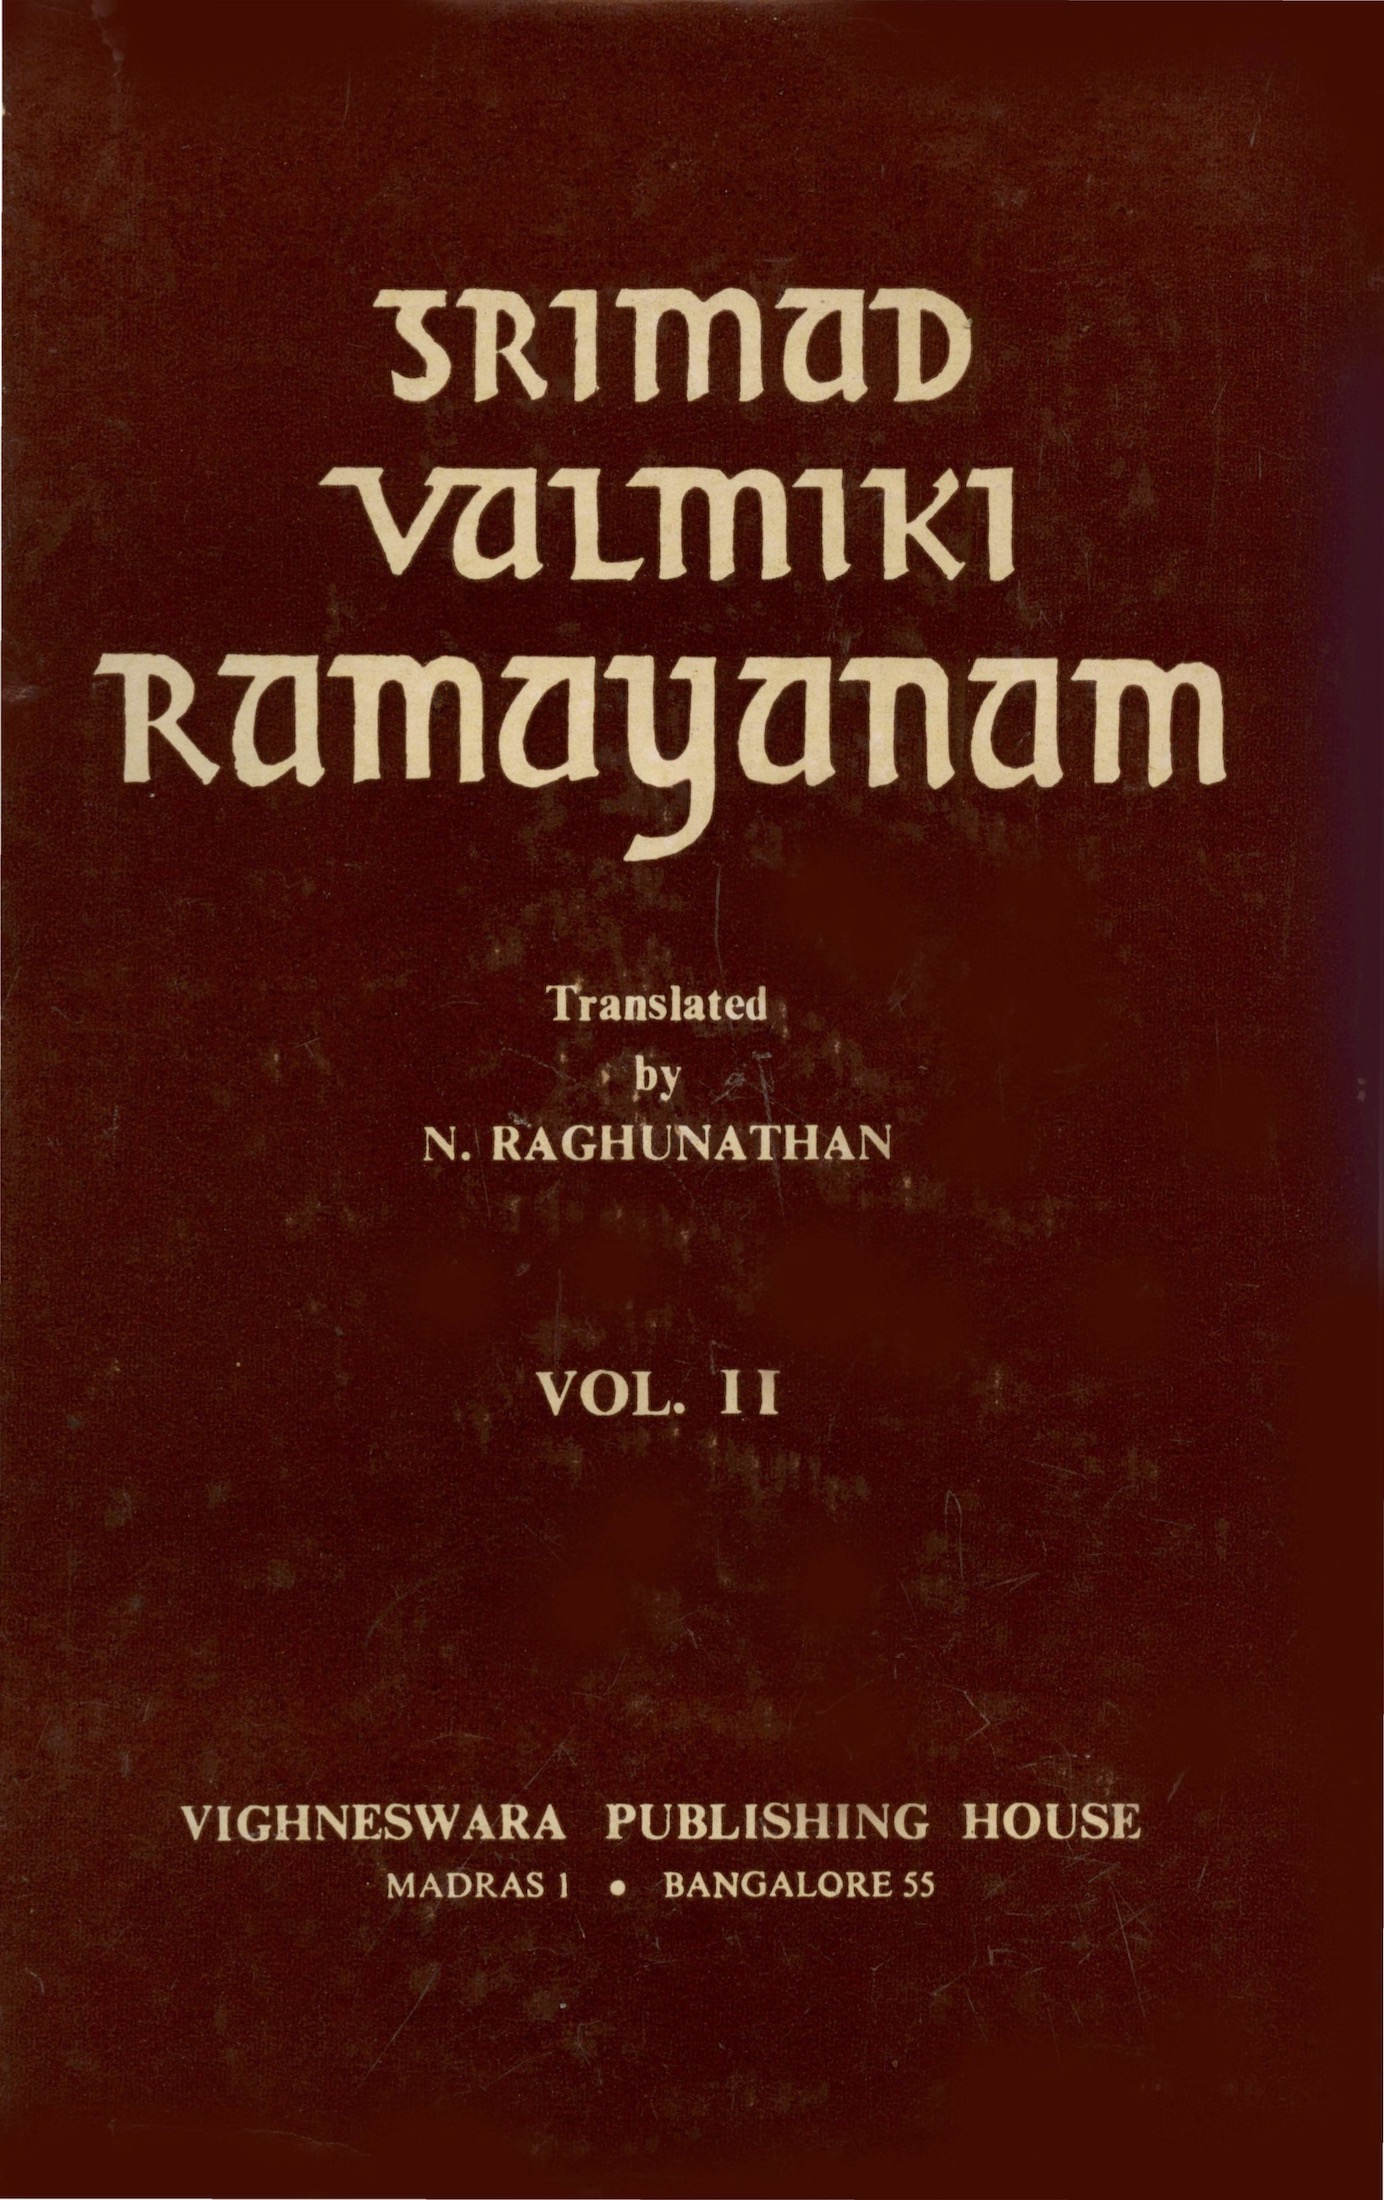 Srimad Valmiki Ramayanam-Vol.-2- English Translation